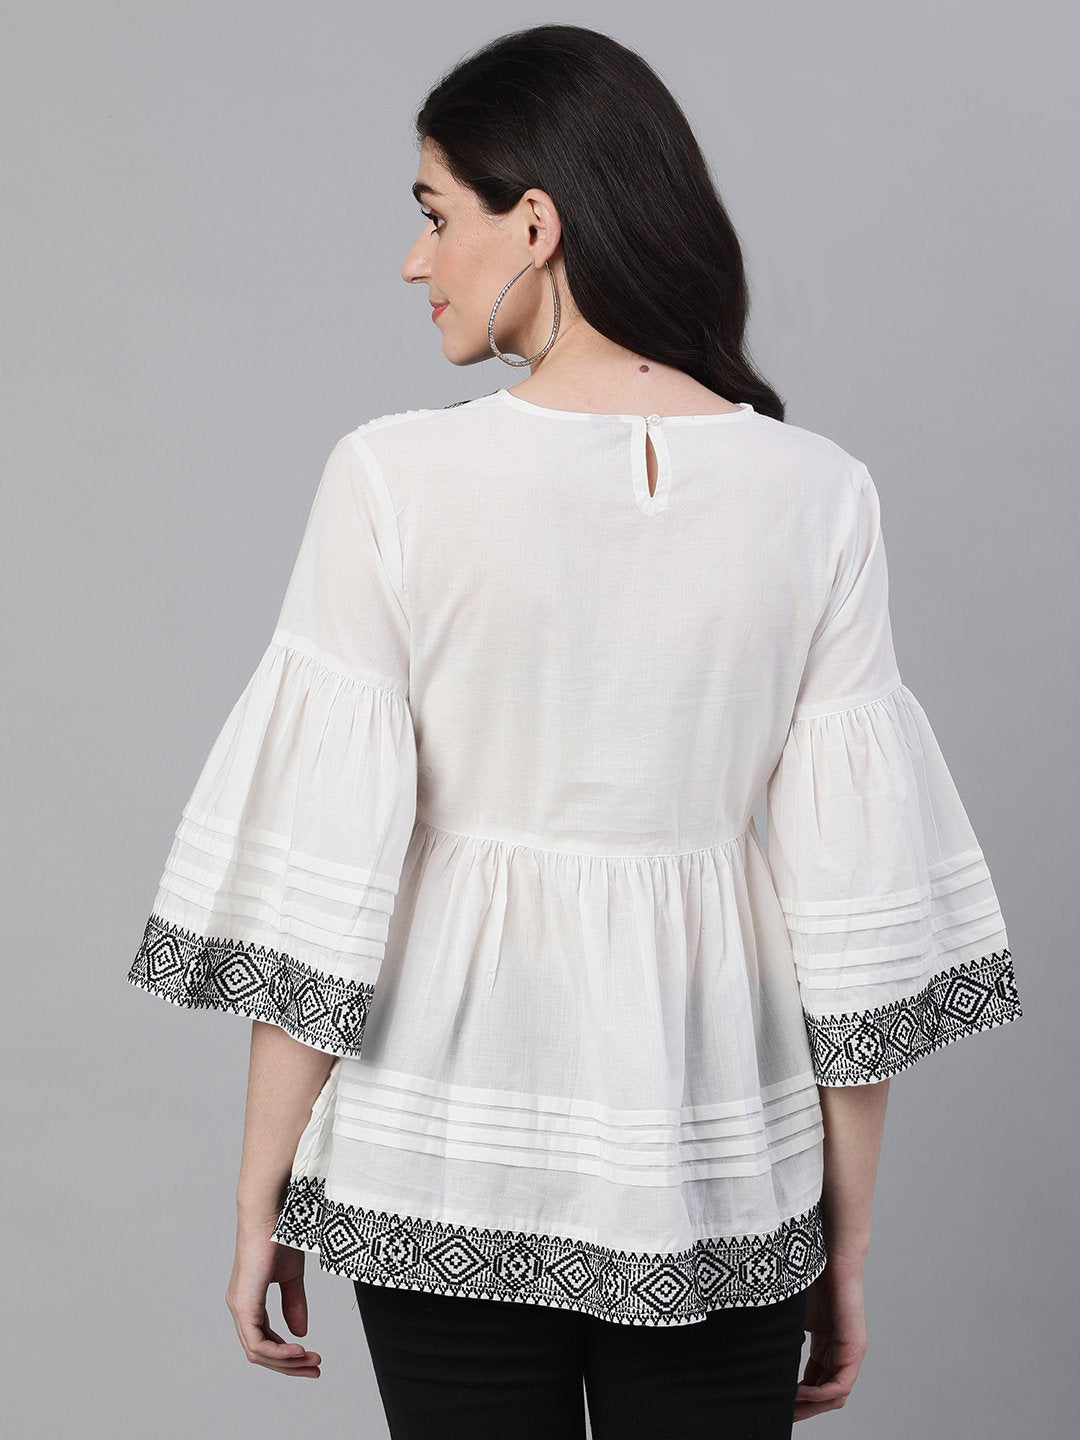 Ishin Women's Cotton White Embroidered Top